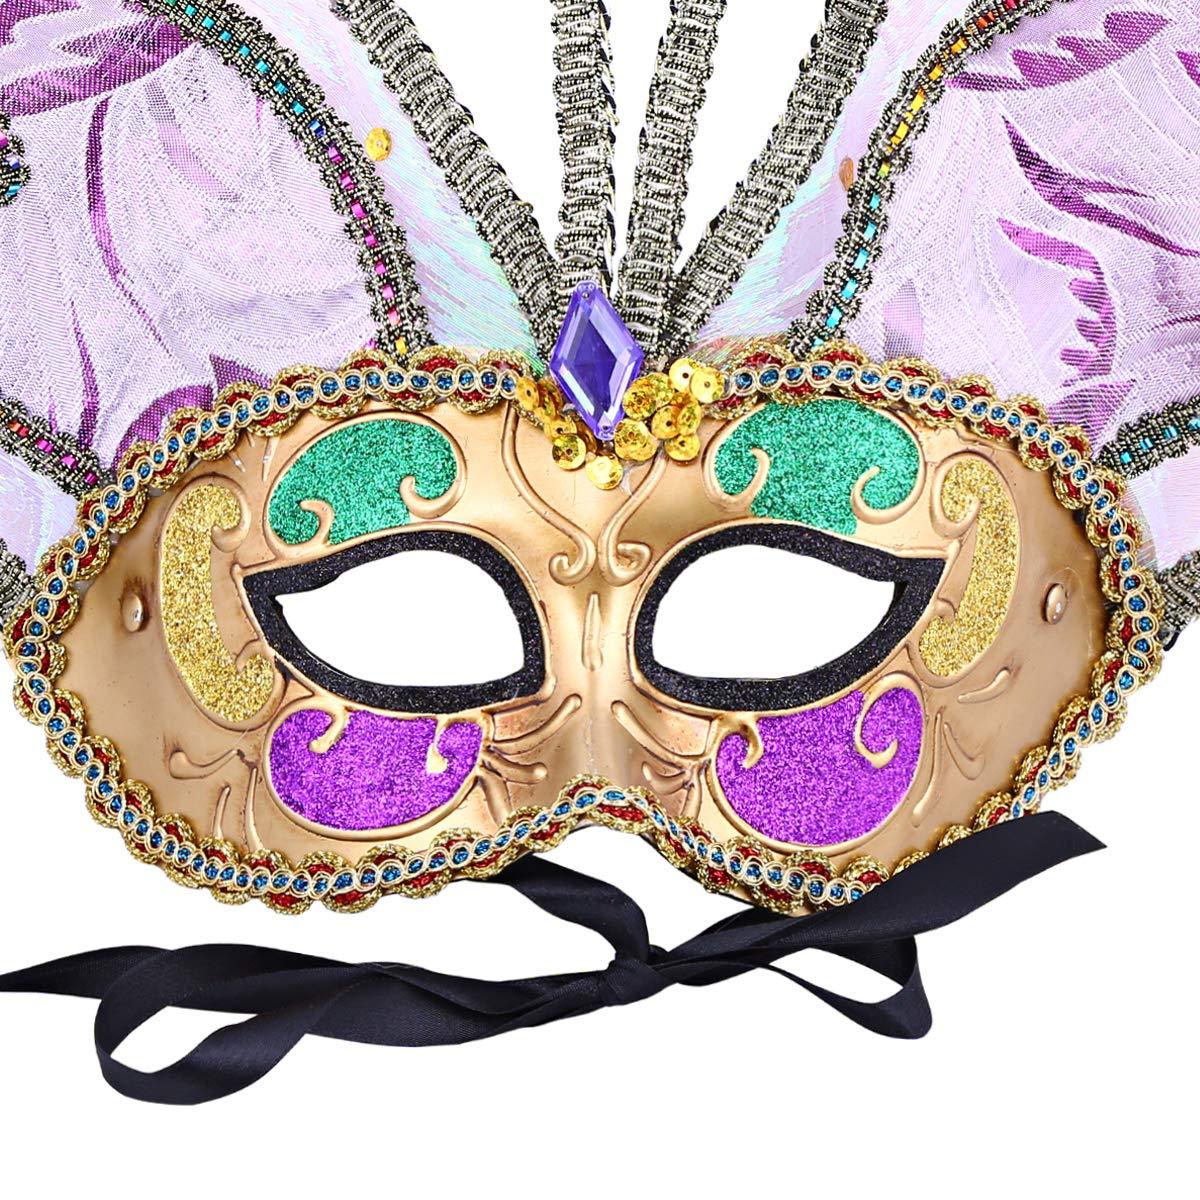 Daweigao Carnival Mask - B2009, Gold and Purple